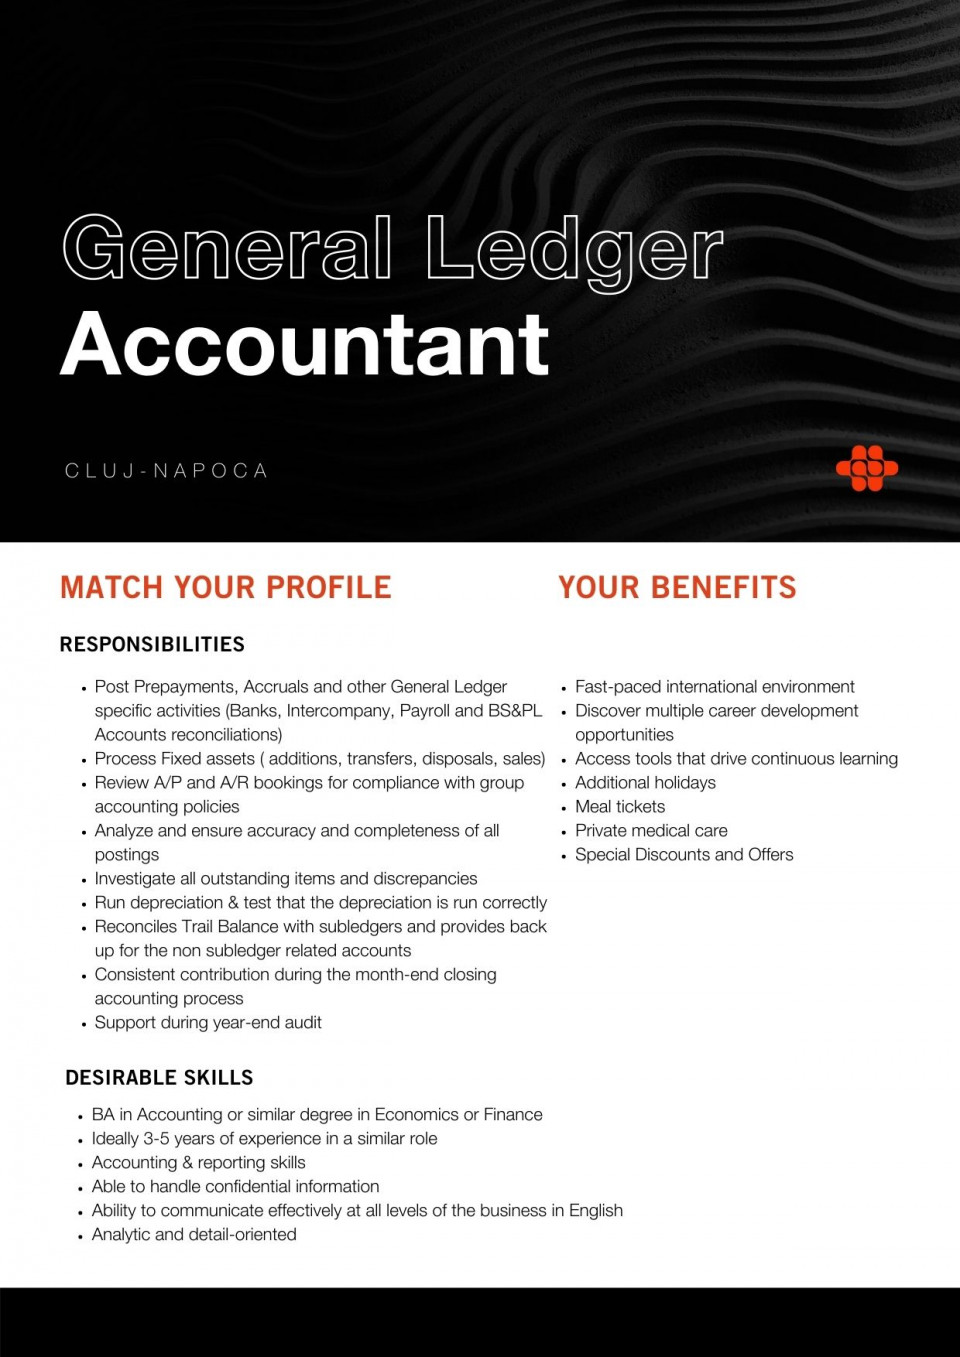 General Ledger Accountant